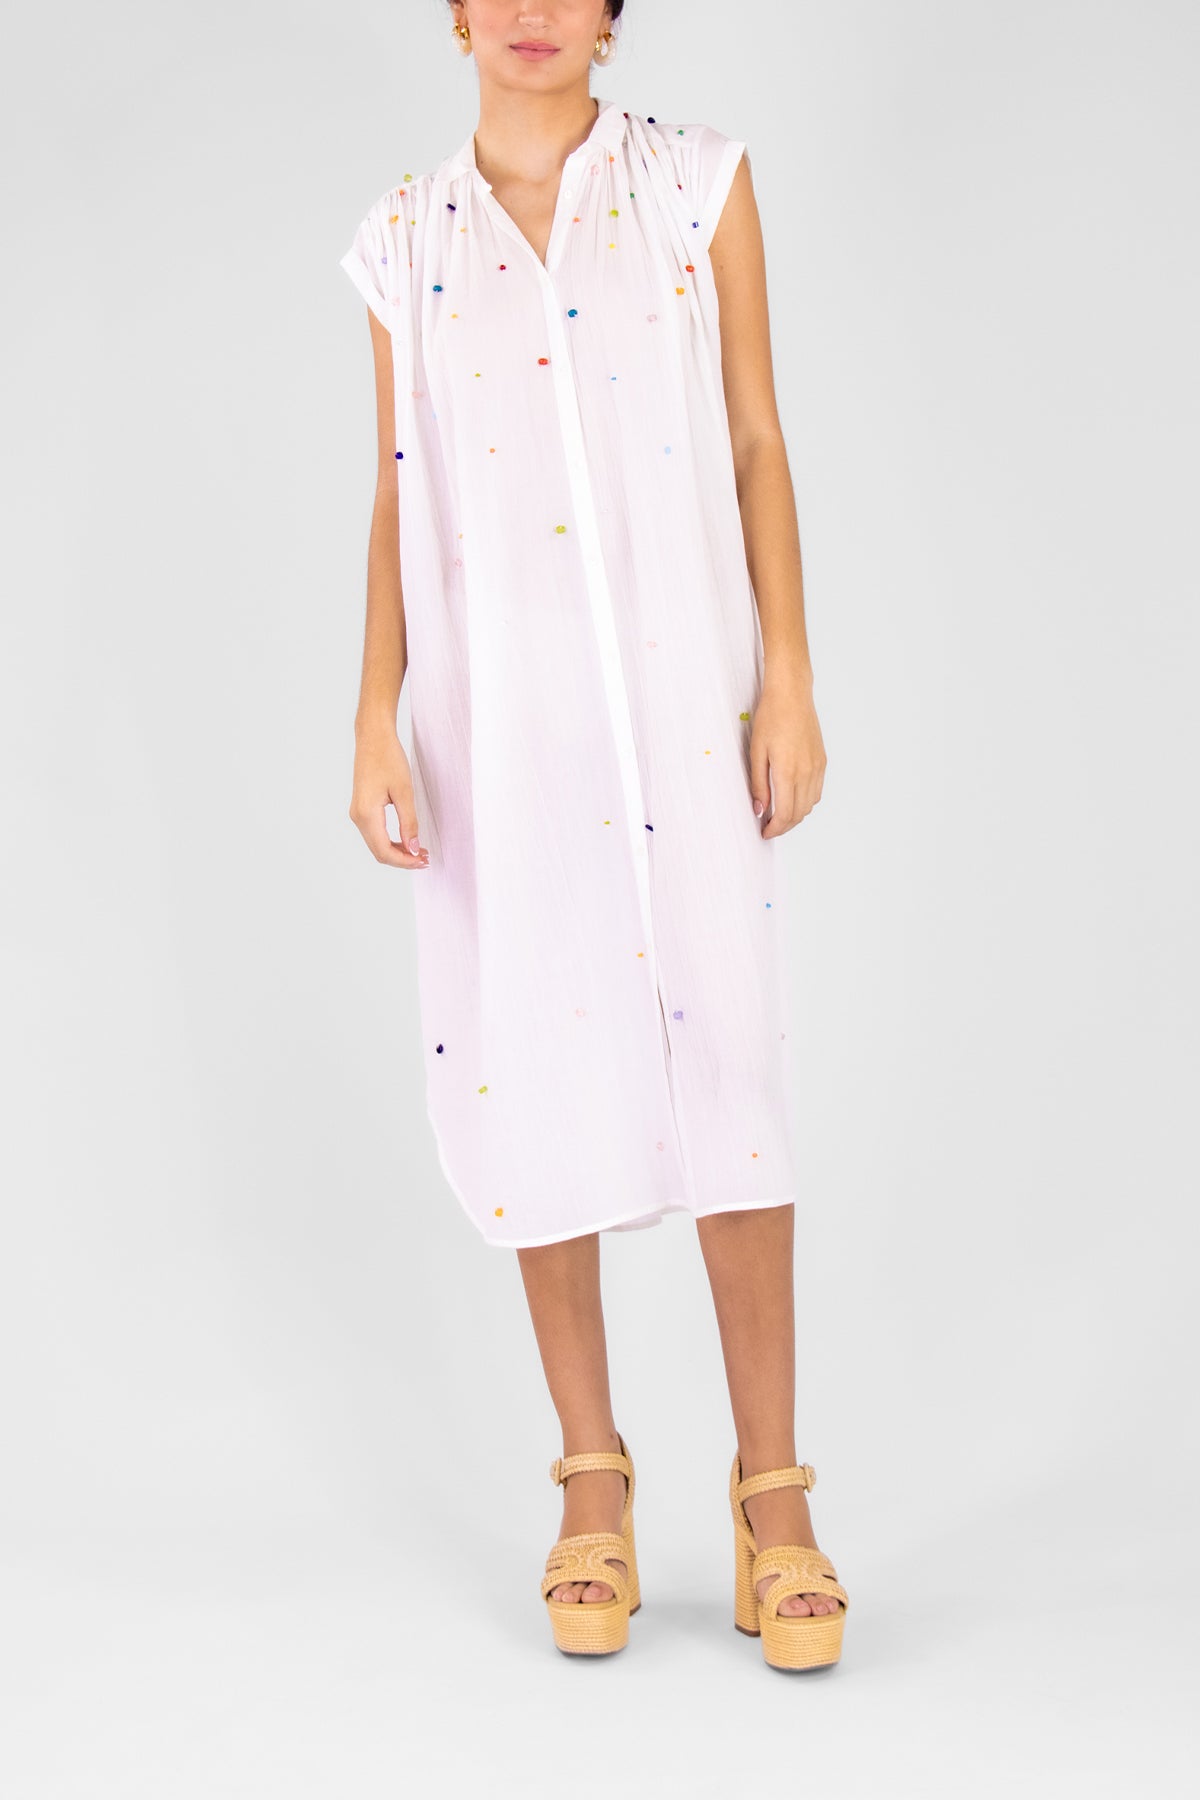 "Starlight" Co/Se Voile Sleeveless Dress in Color - shop-olivia.com